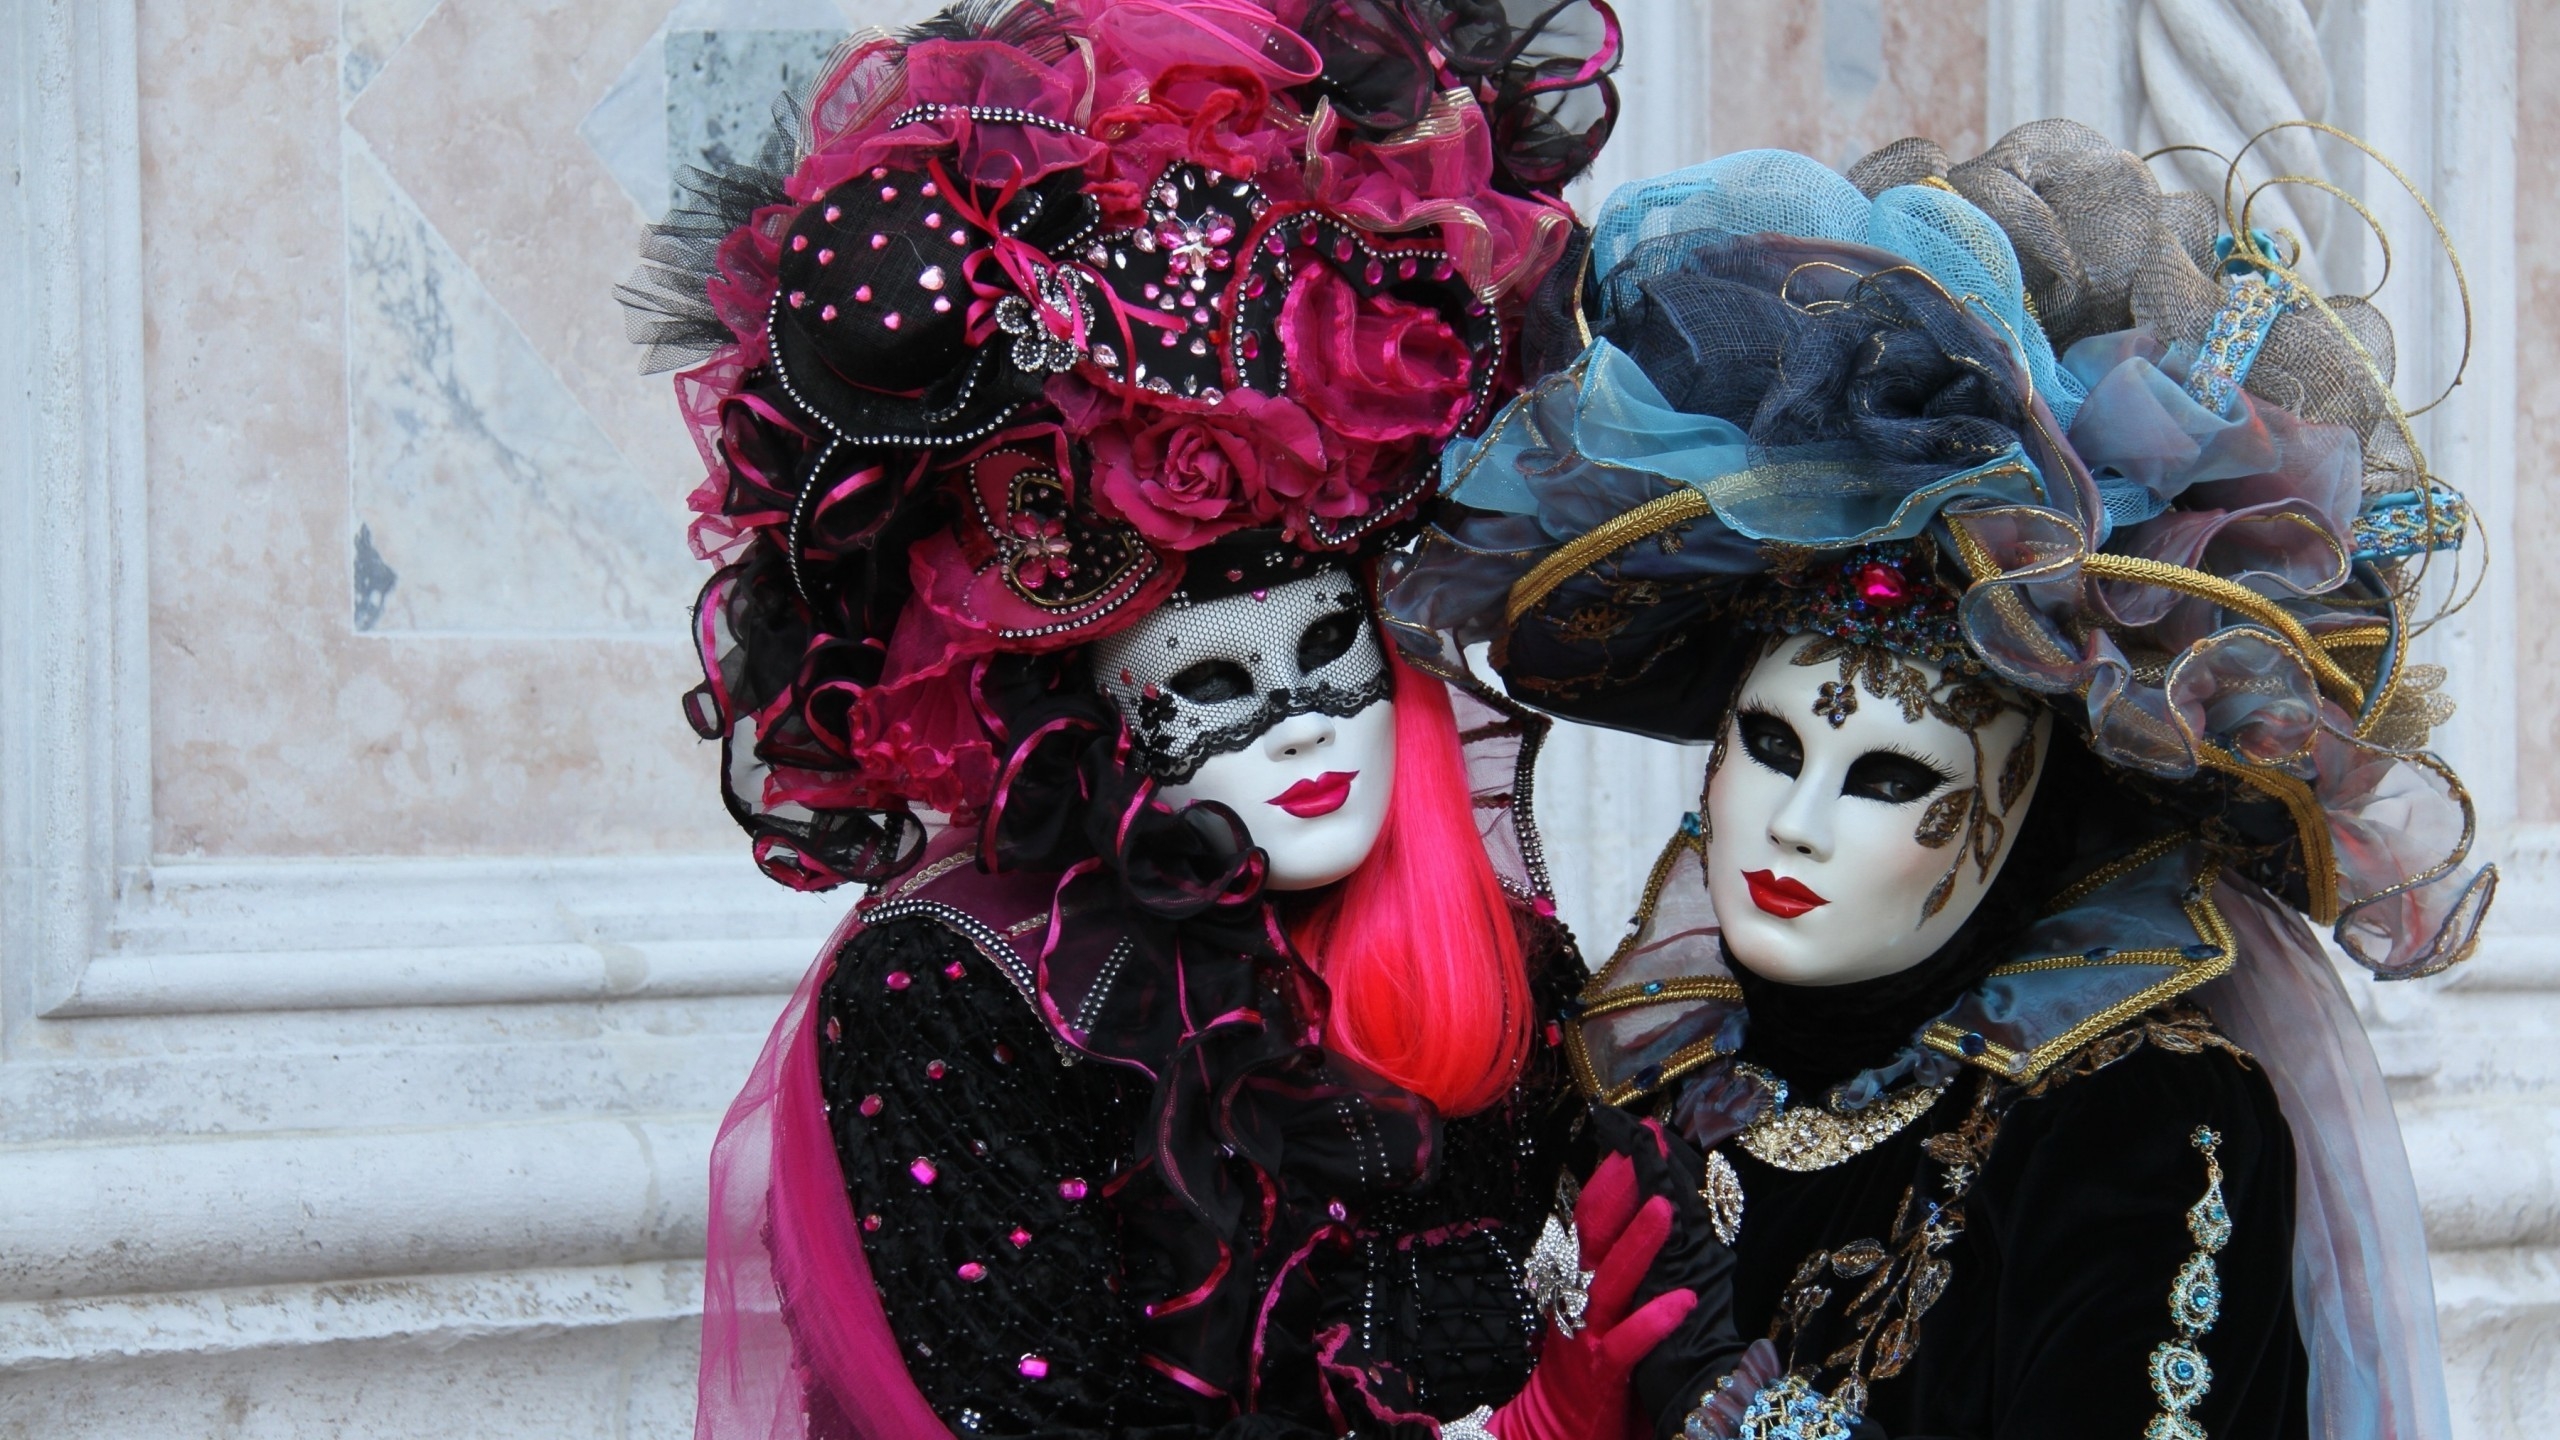 Venice Carnival for 2560x1440 HDTV resolution